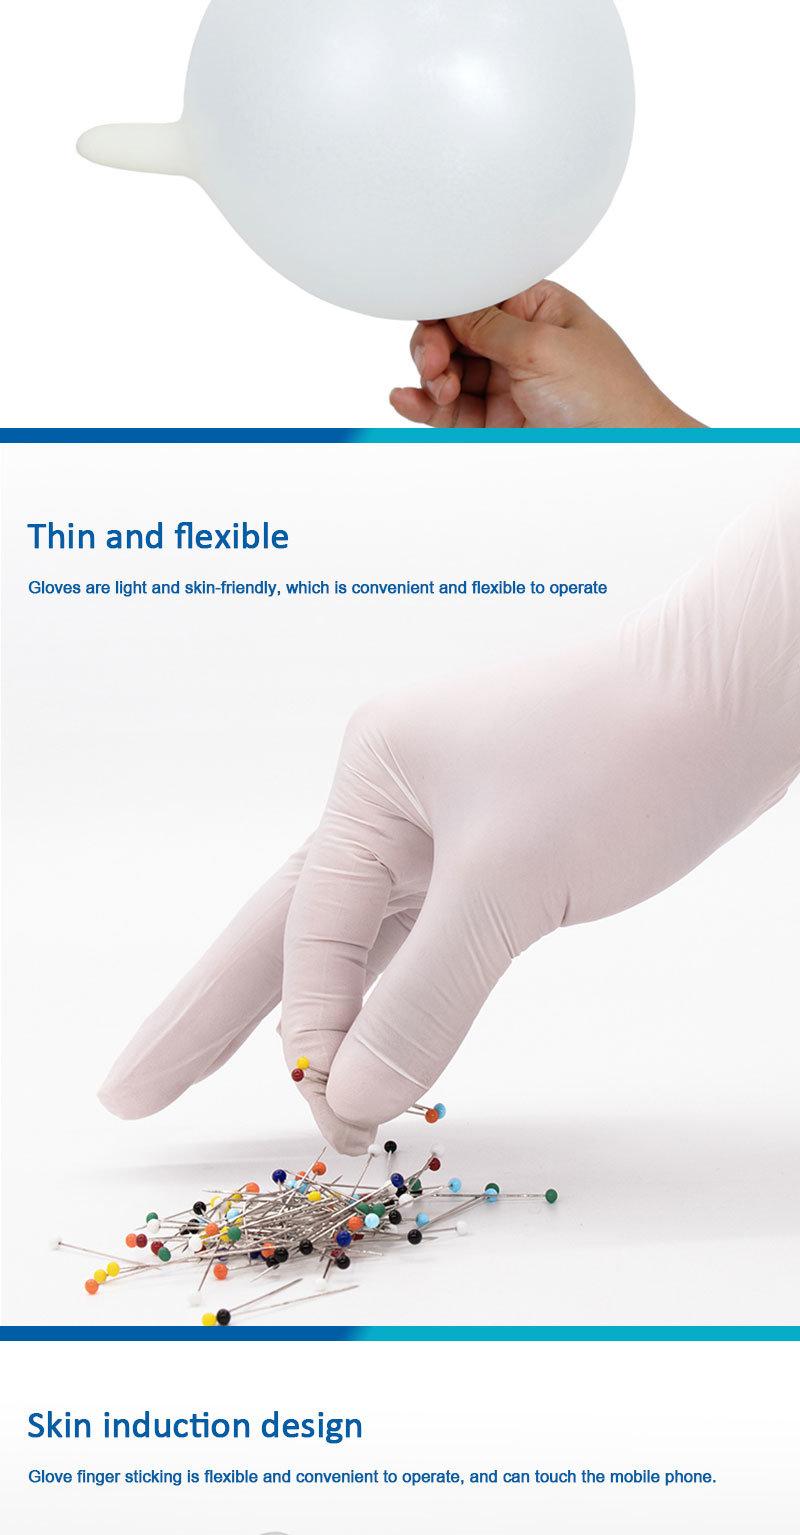 Disposable Nitrile Latex Vinyl PE Gloves Powder Free Examination Blend Protective Glove Nitrile Gloves